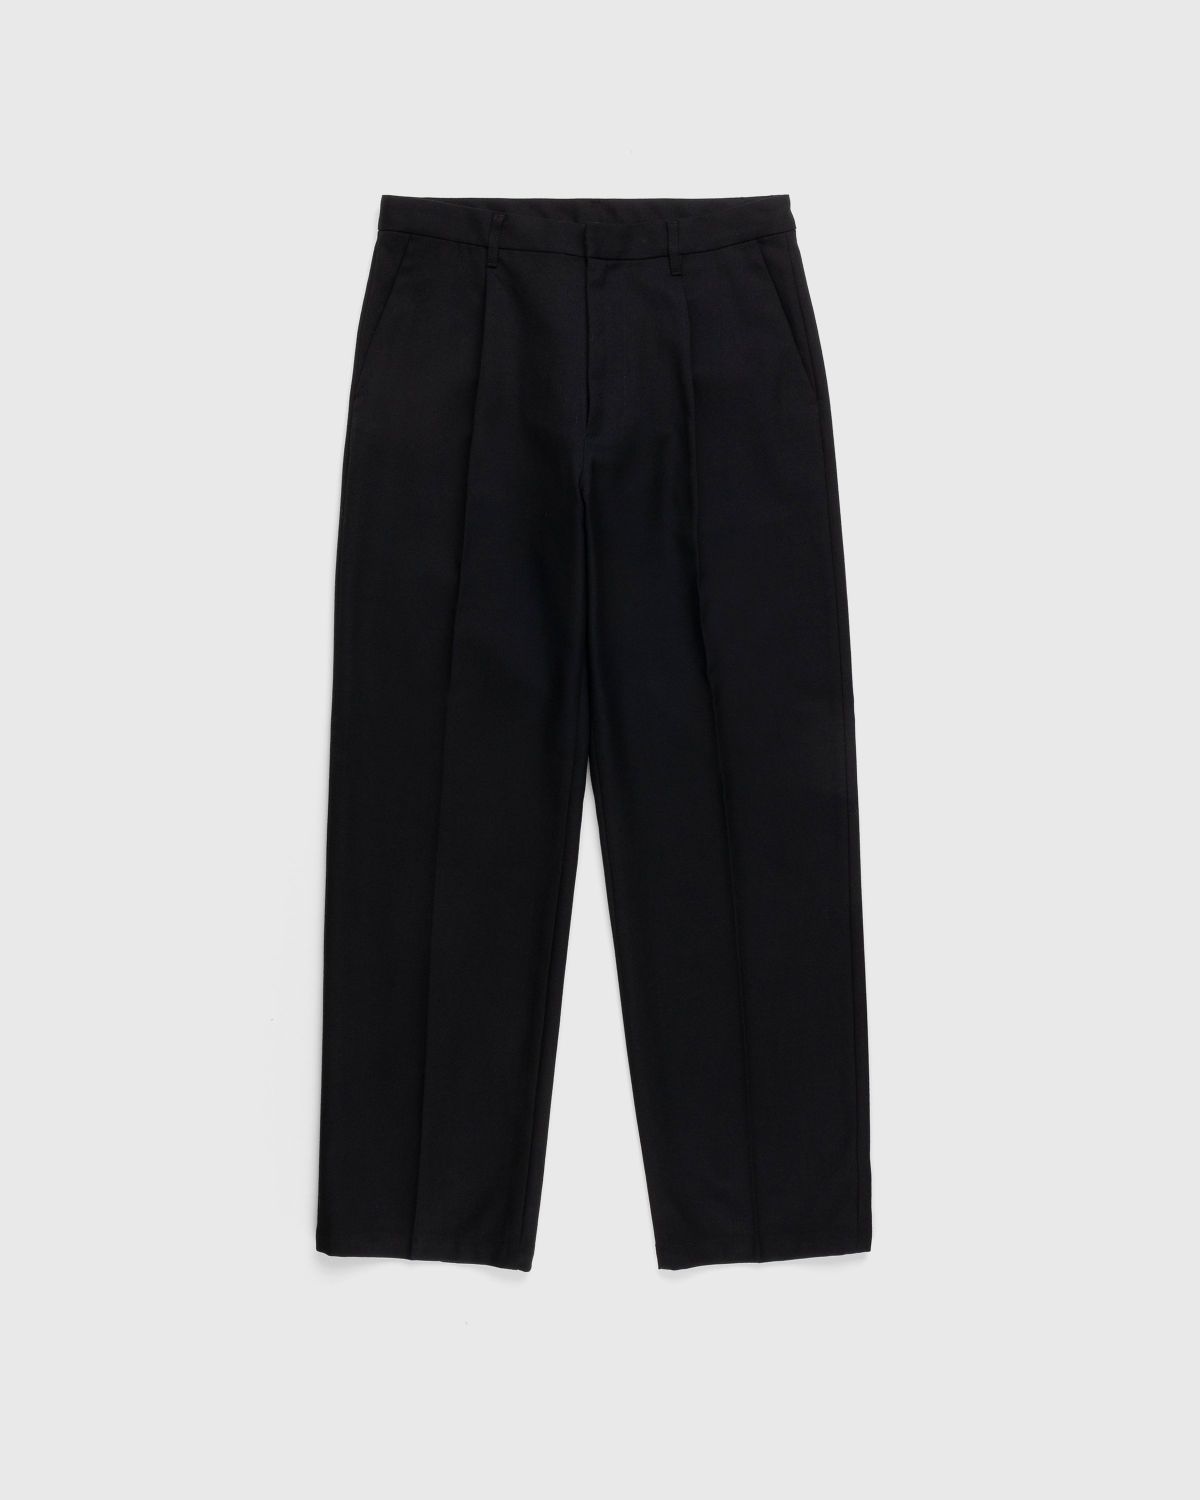 Highsnobiety – Heavy Wool Dress Pants Black - Pants - Black - Image 1